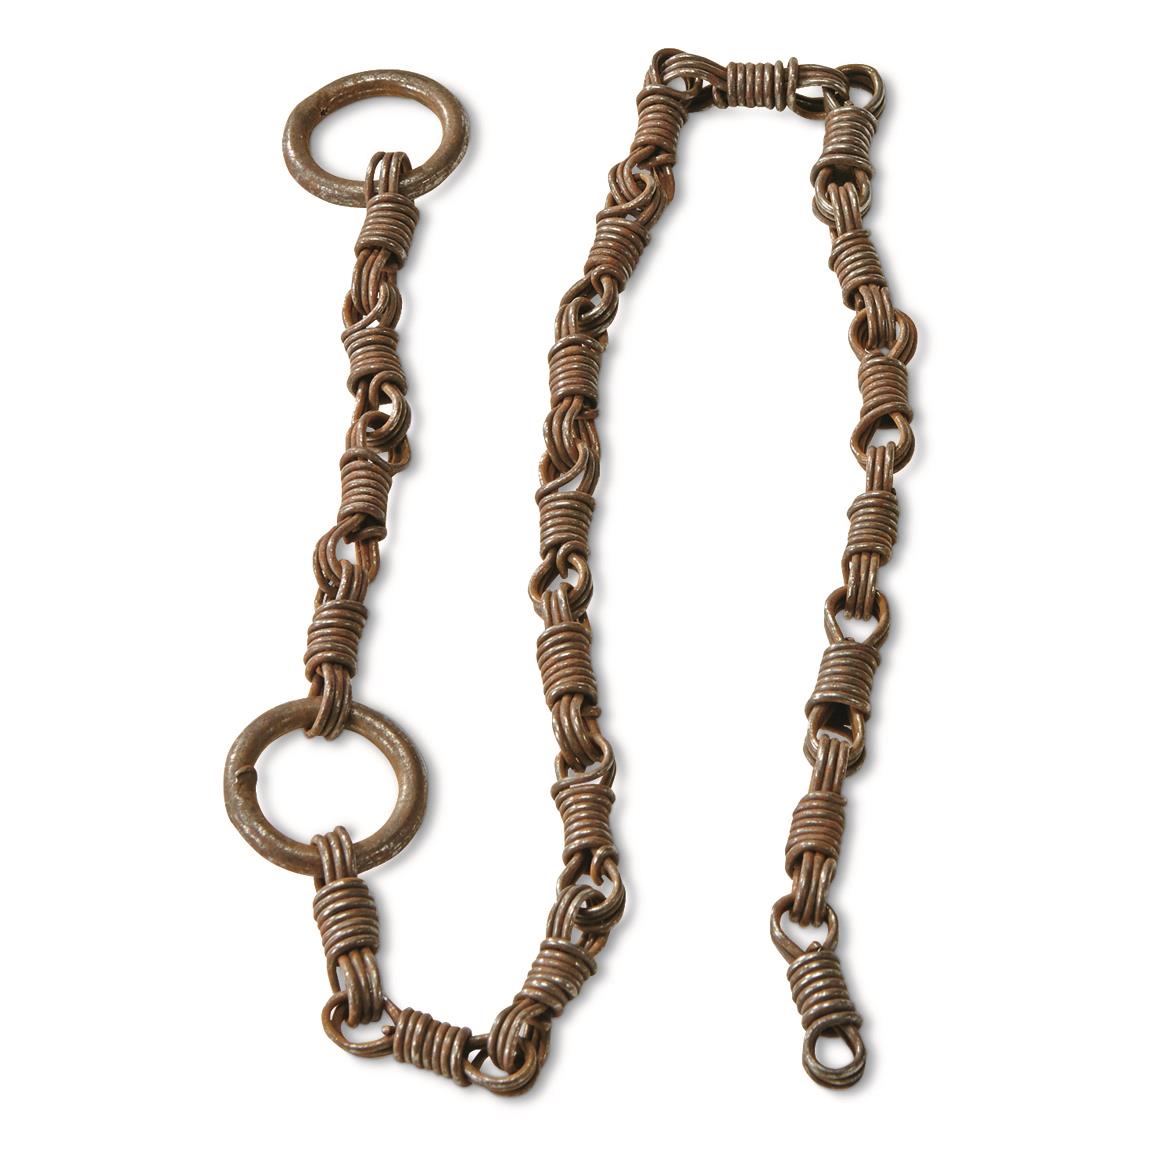 Italian Police Surplus Handcuff Chain, Used